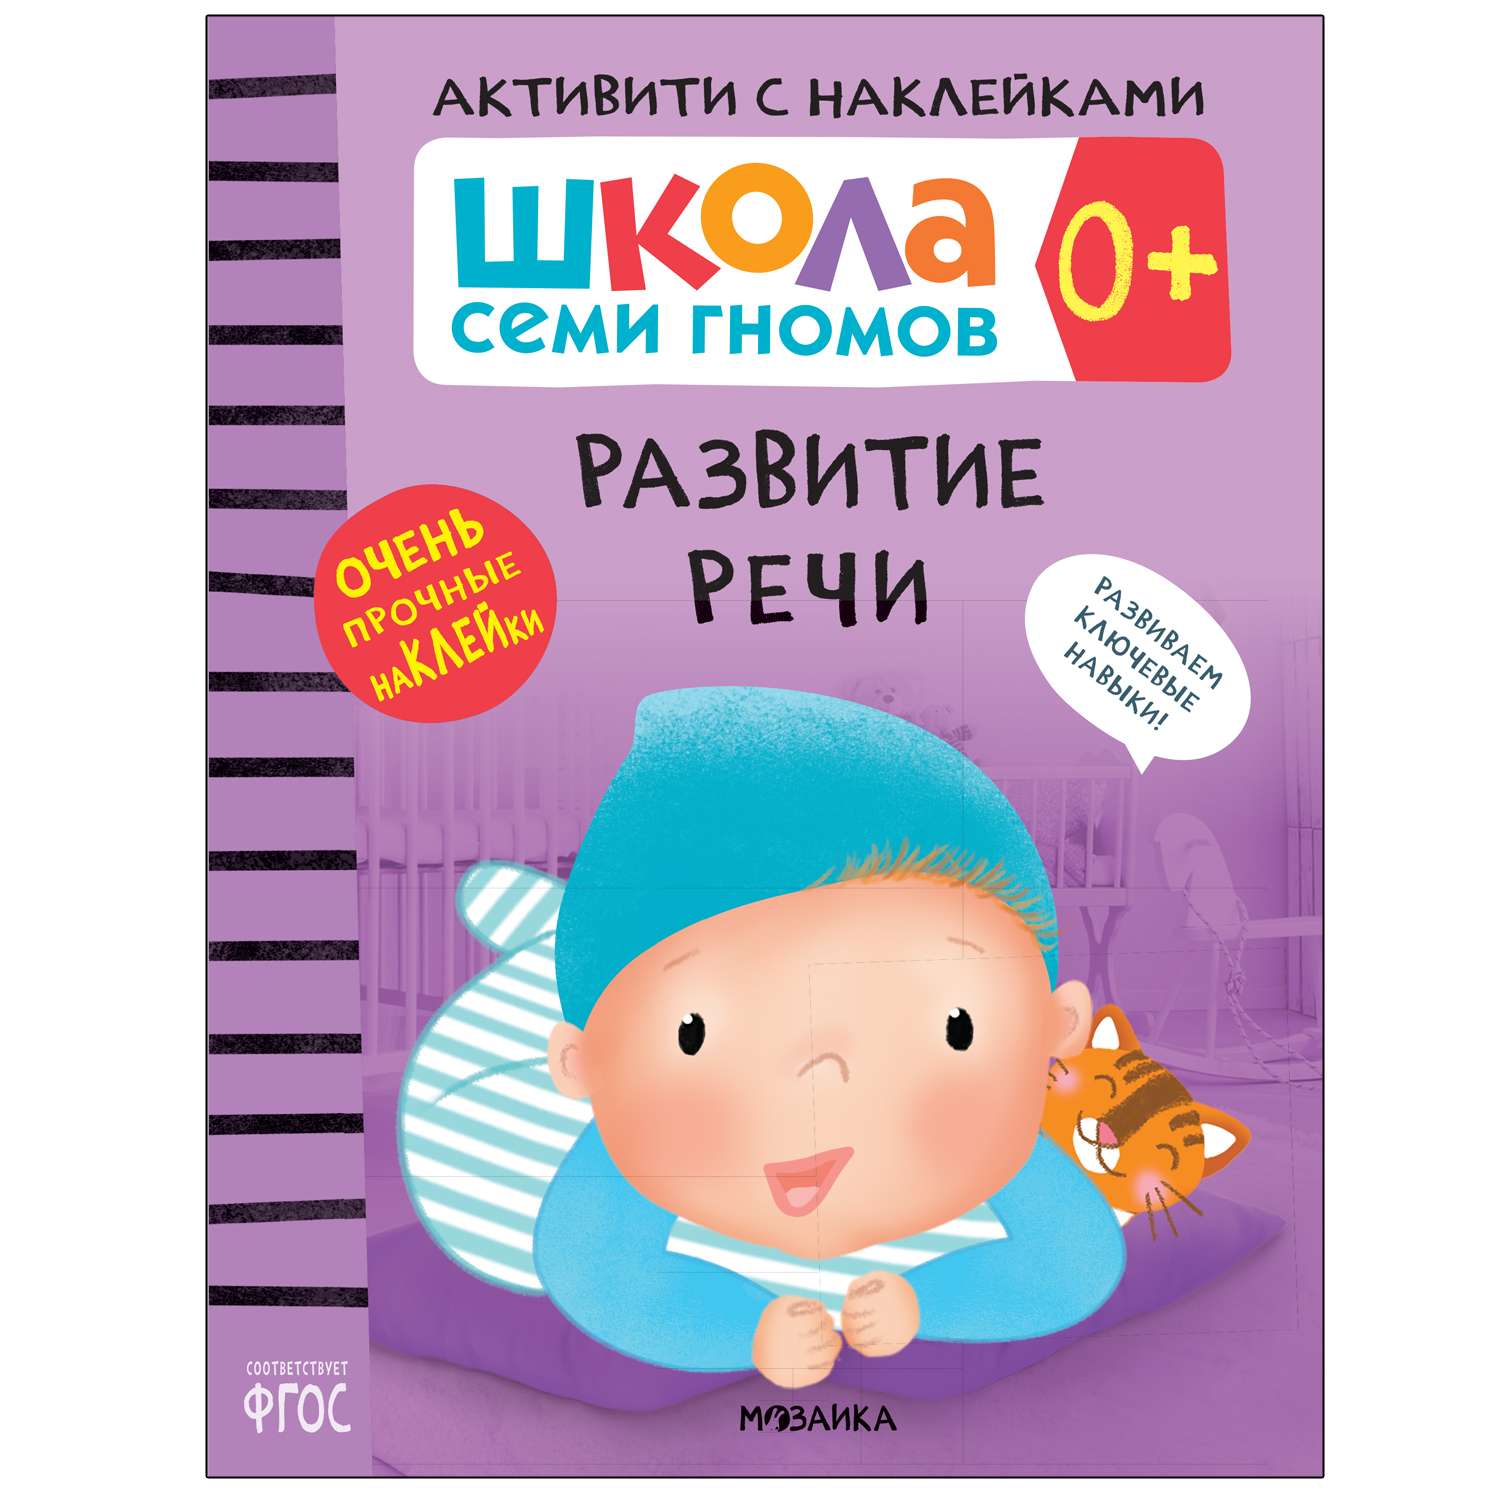 Комплект МОЗАИКА kids Школа Семи Гномов Активити с наклейками 0 - фото 4